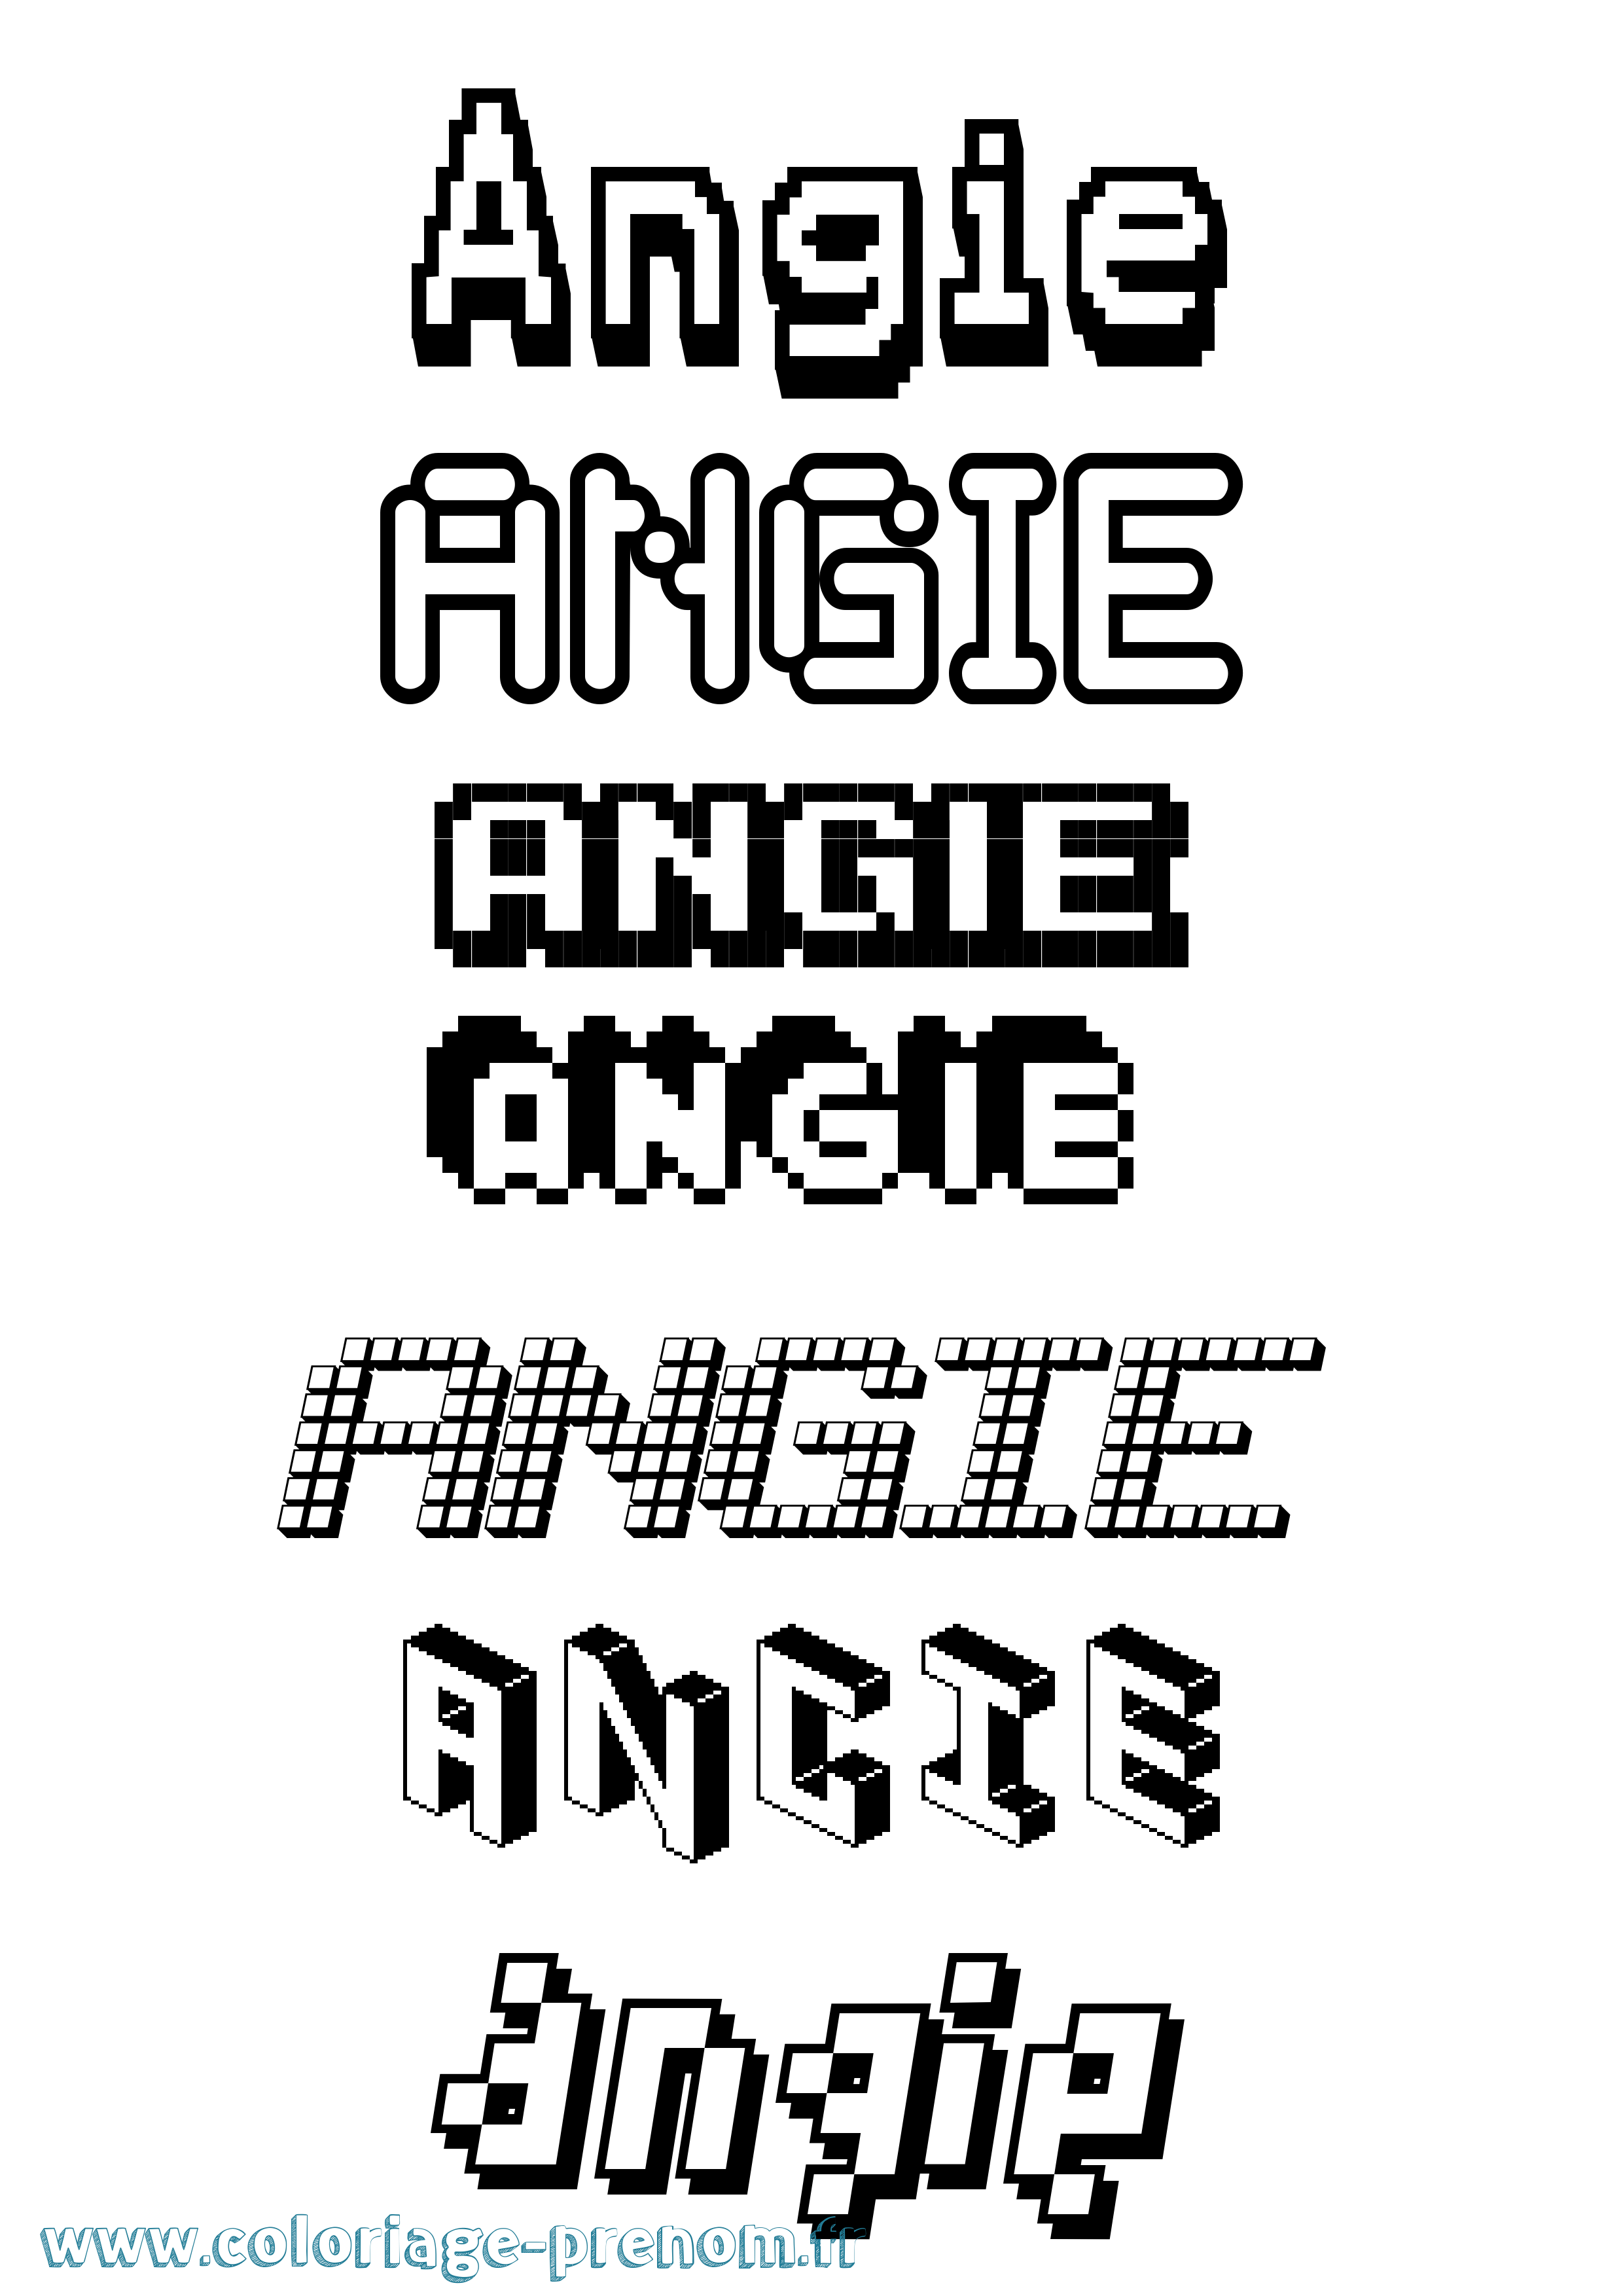 Coloriage prénom Angie